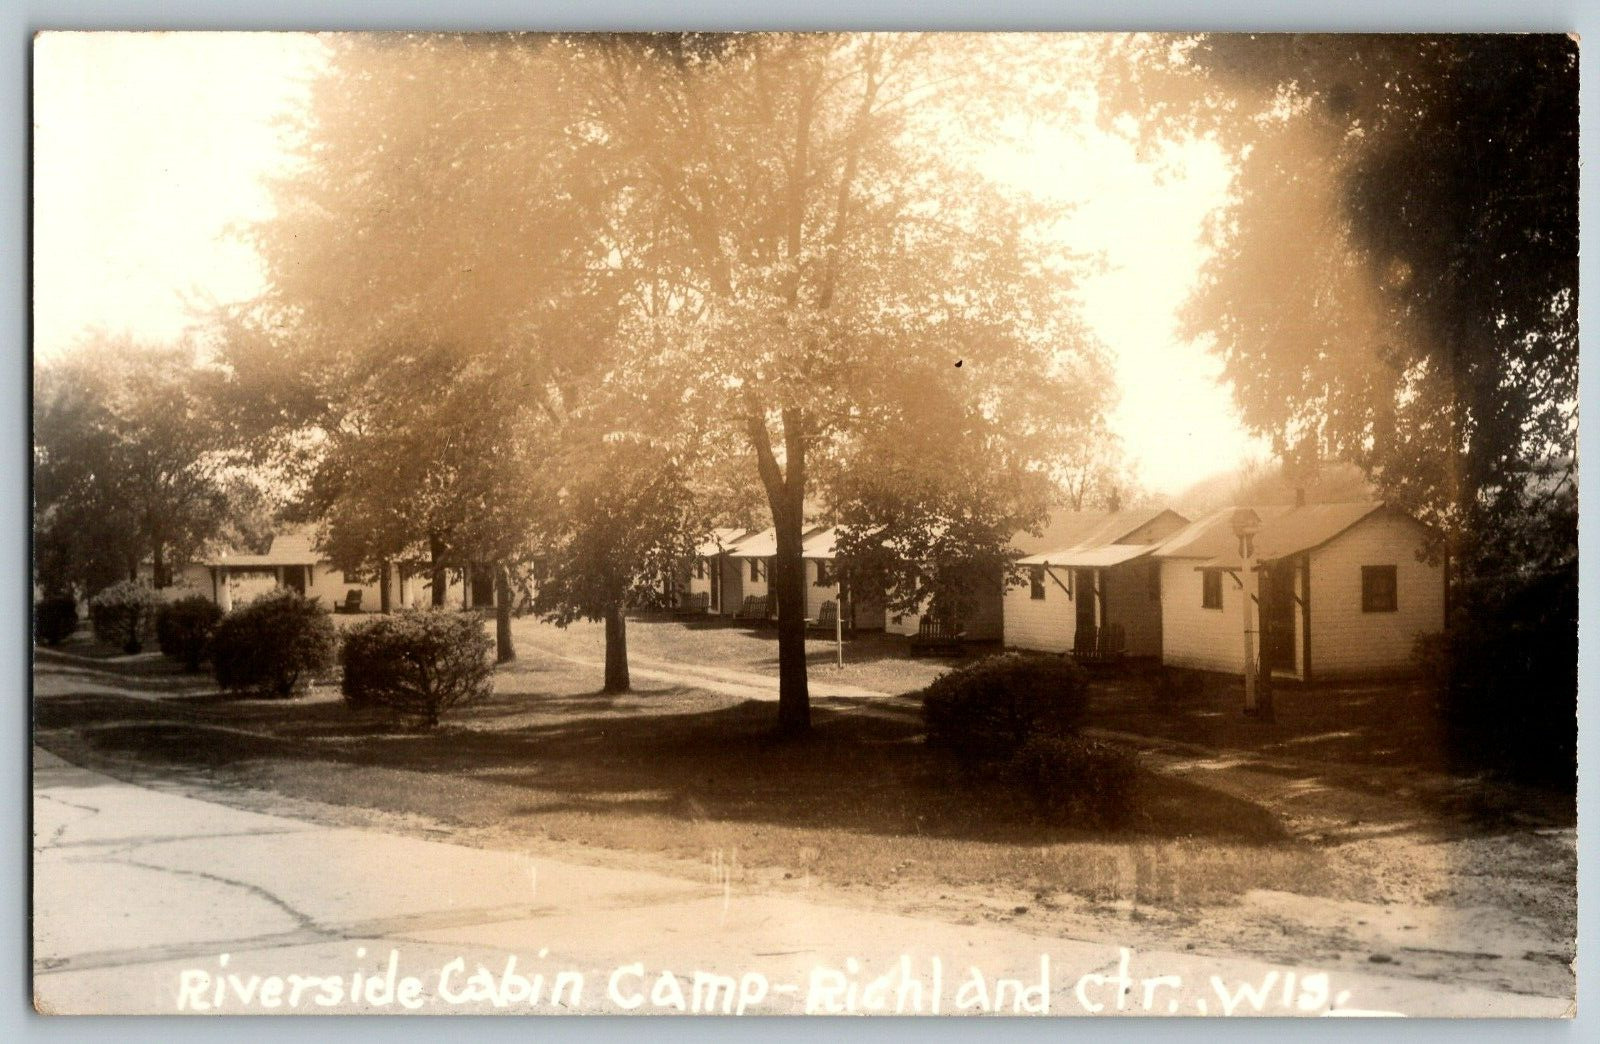 RPPC Vintage Postcard - Wisconsin - Riverside Cabin Camp - Richland Ctr